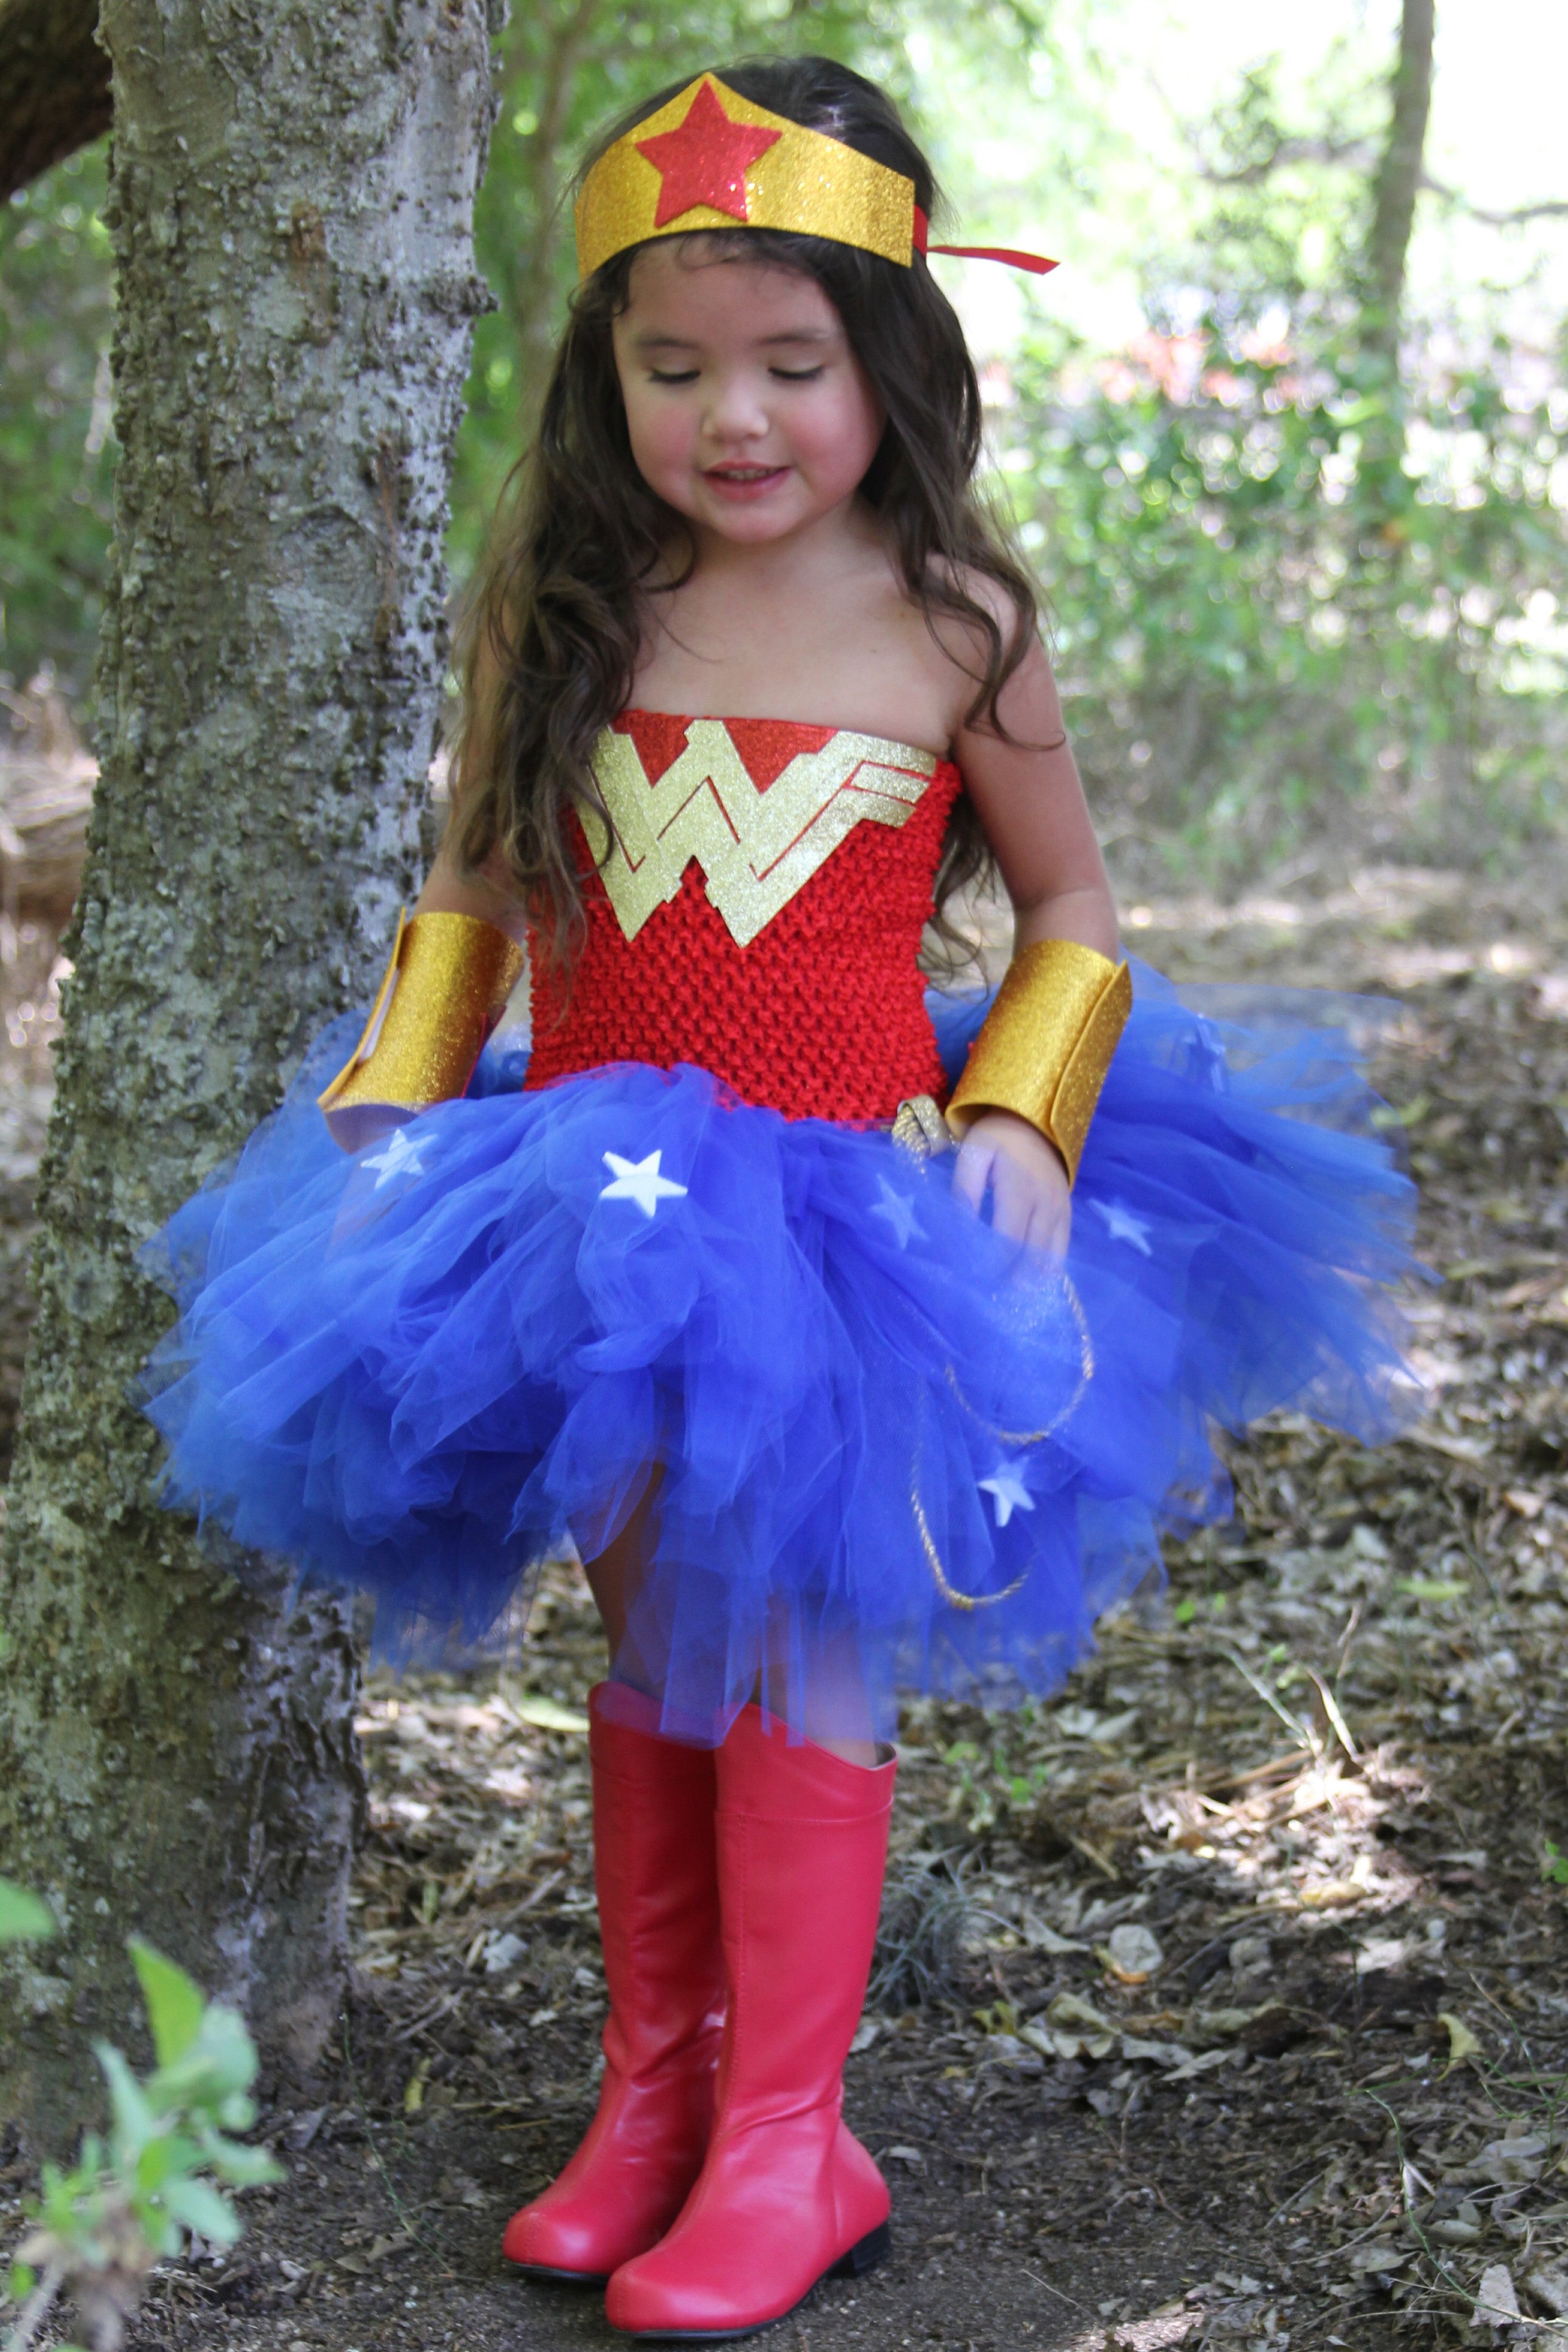 Girl's Wonder Woman Costume